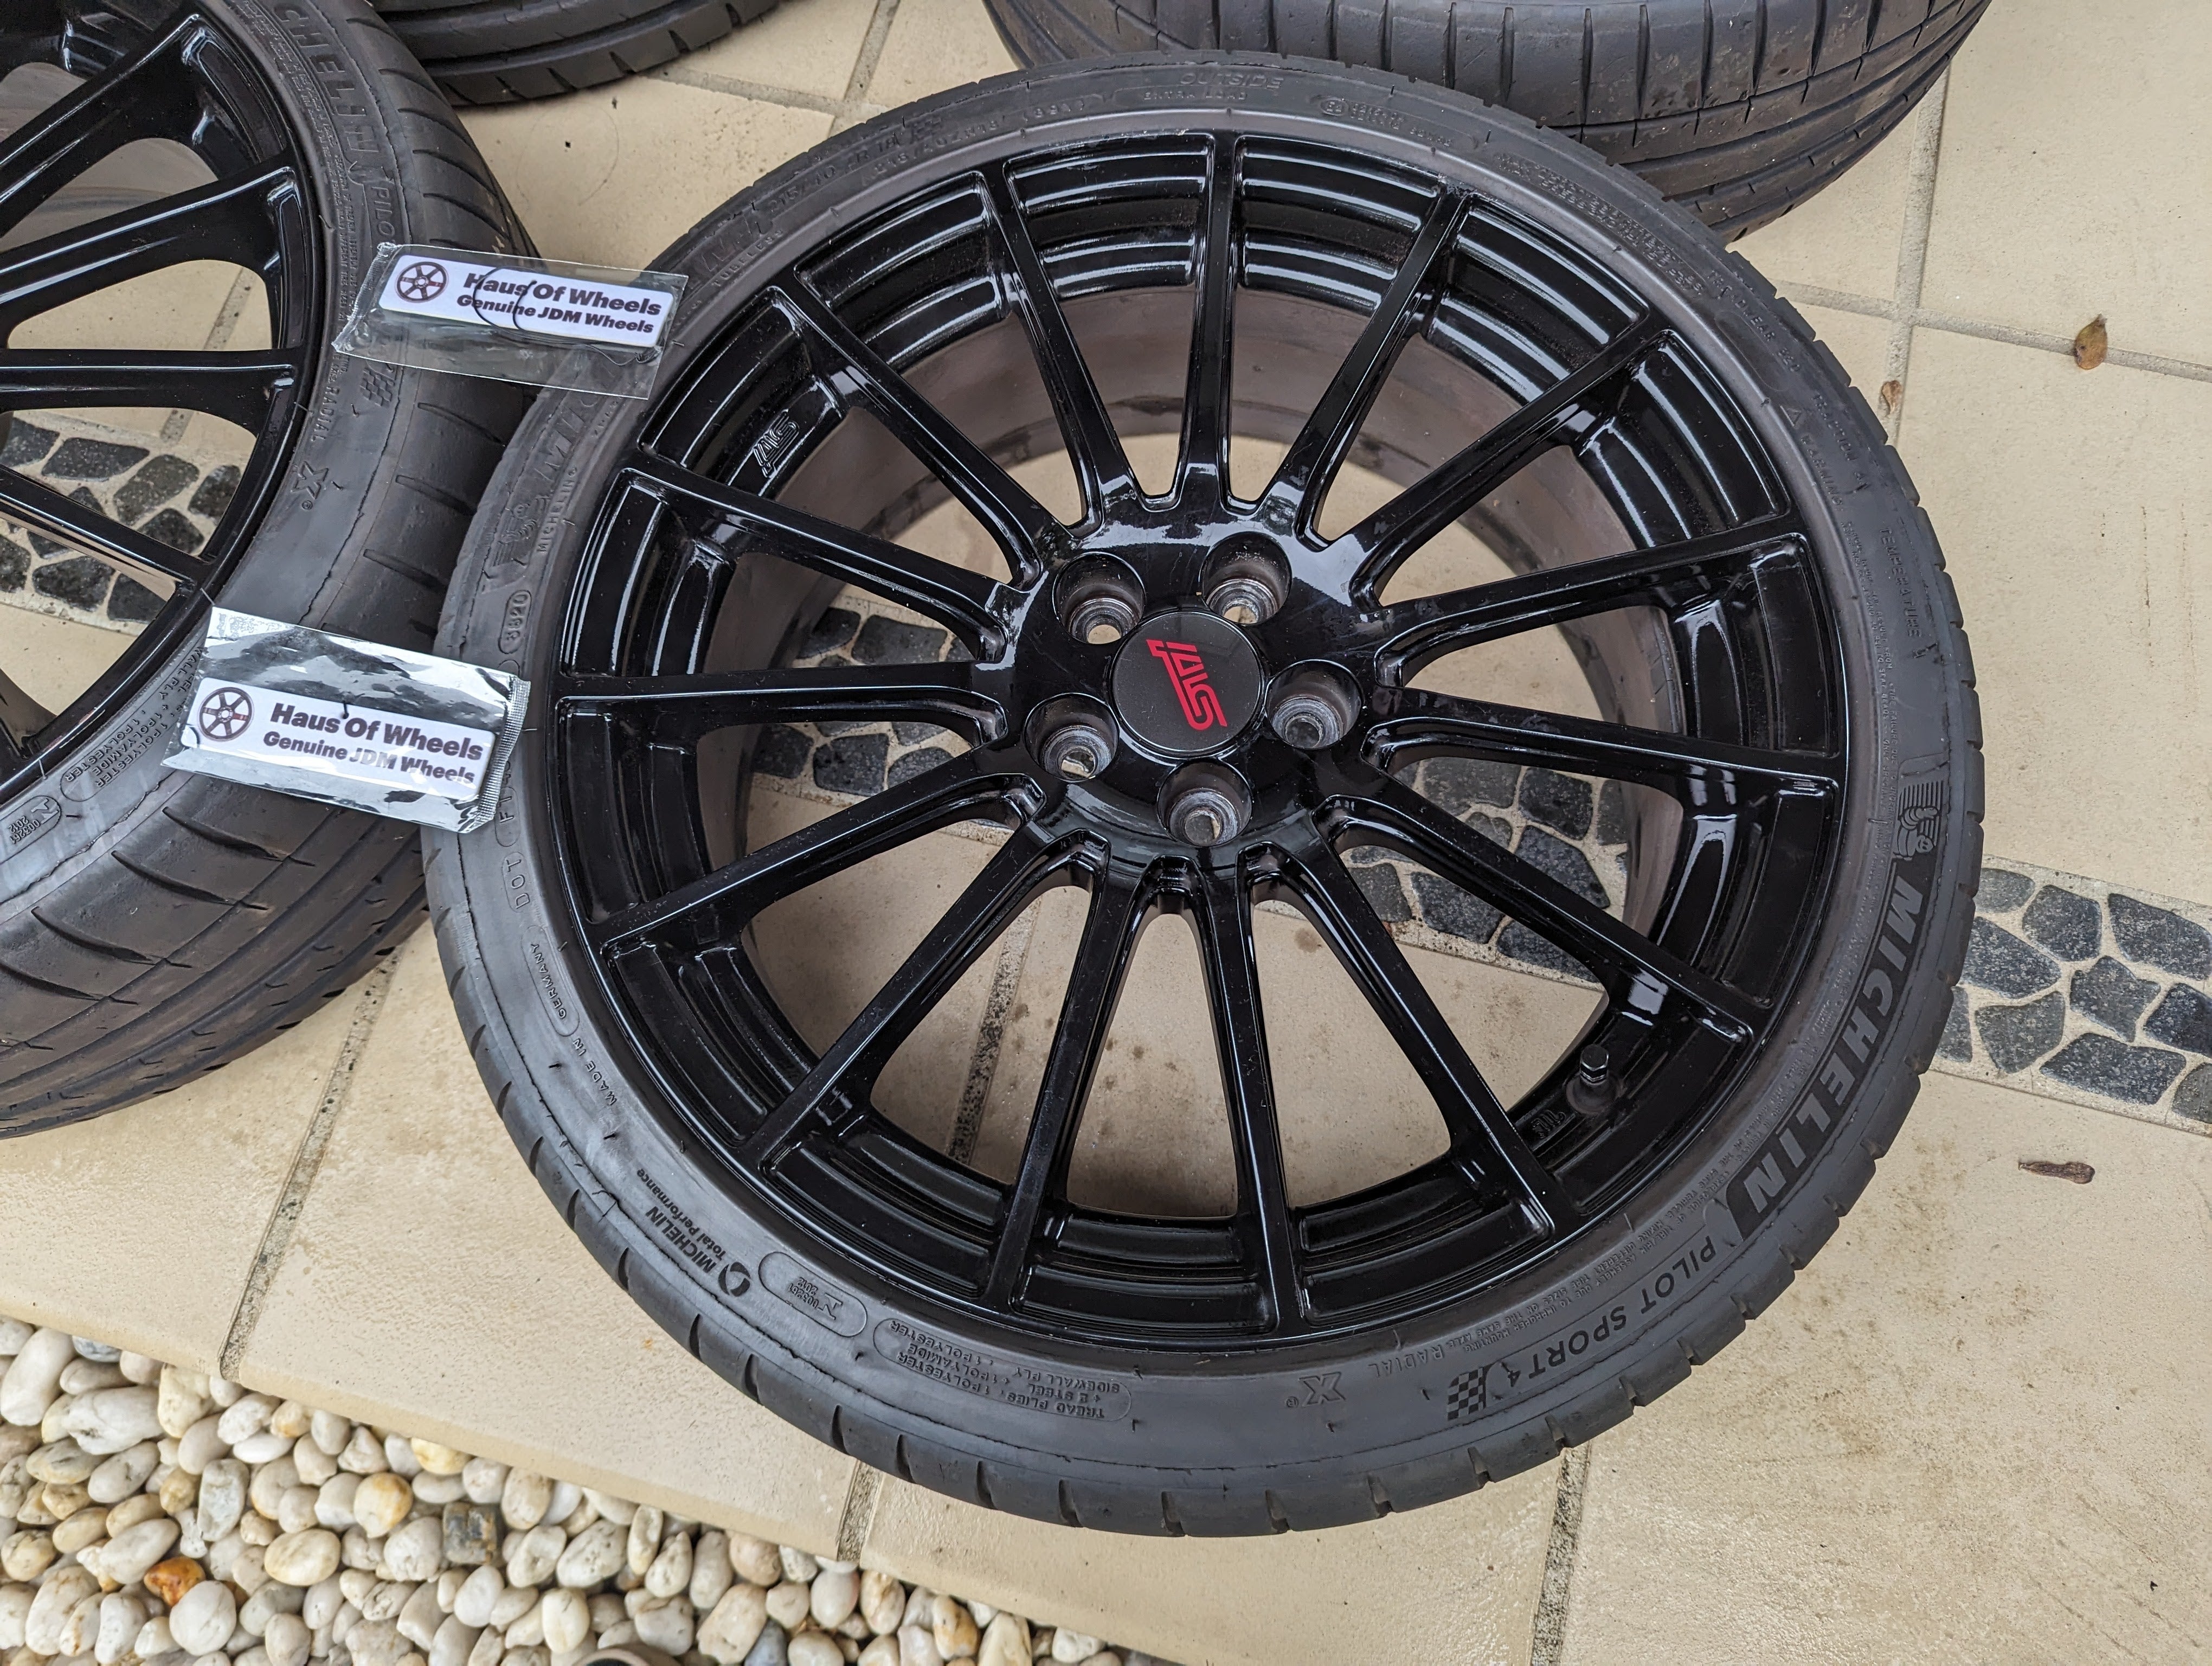 Enkei x STI Special Edition Wheels with Genuine STI Center Caps and Near New Michelin Pilot Sports 4 Tyres